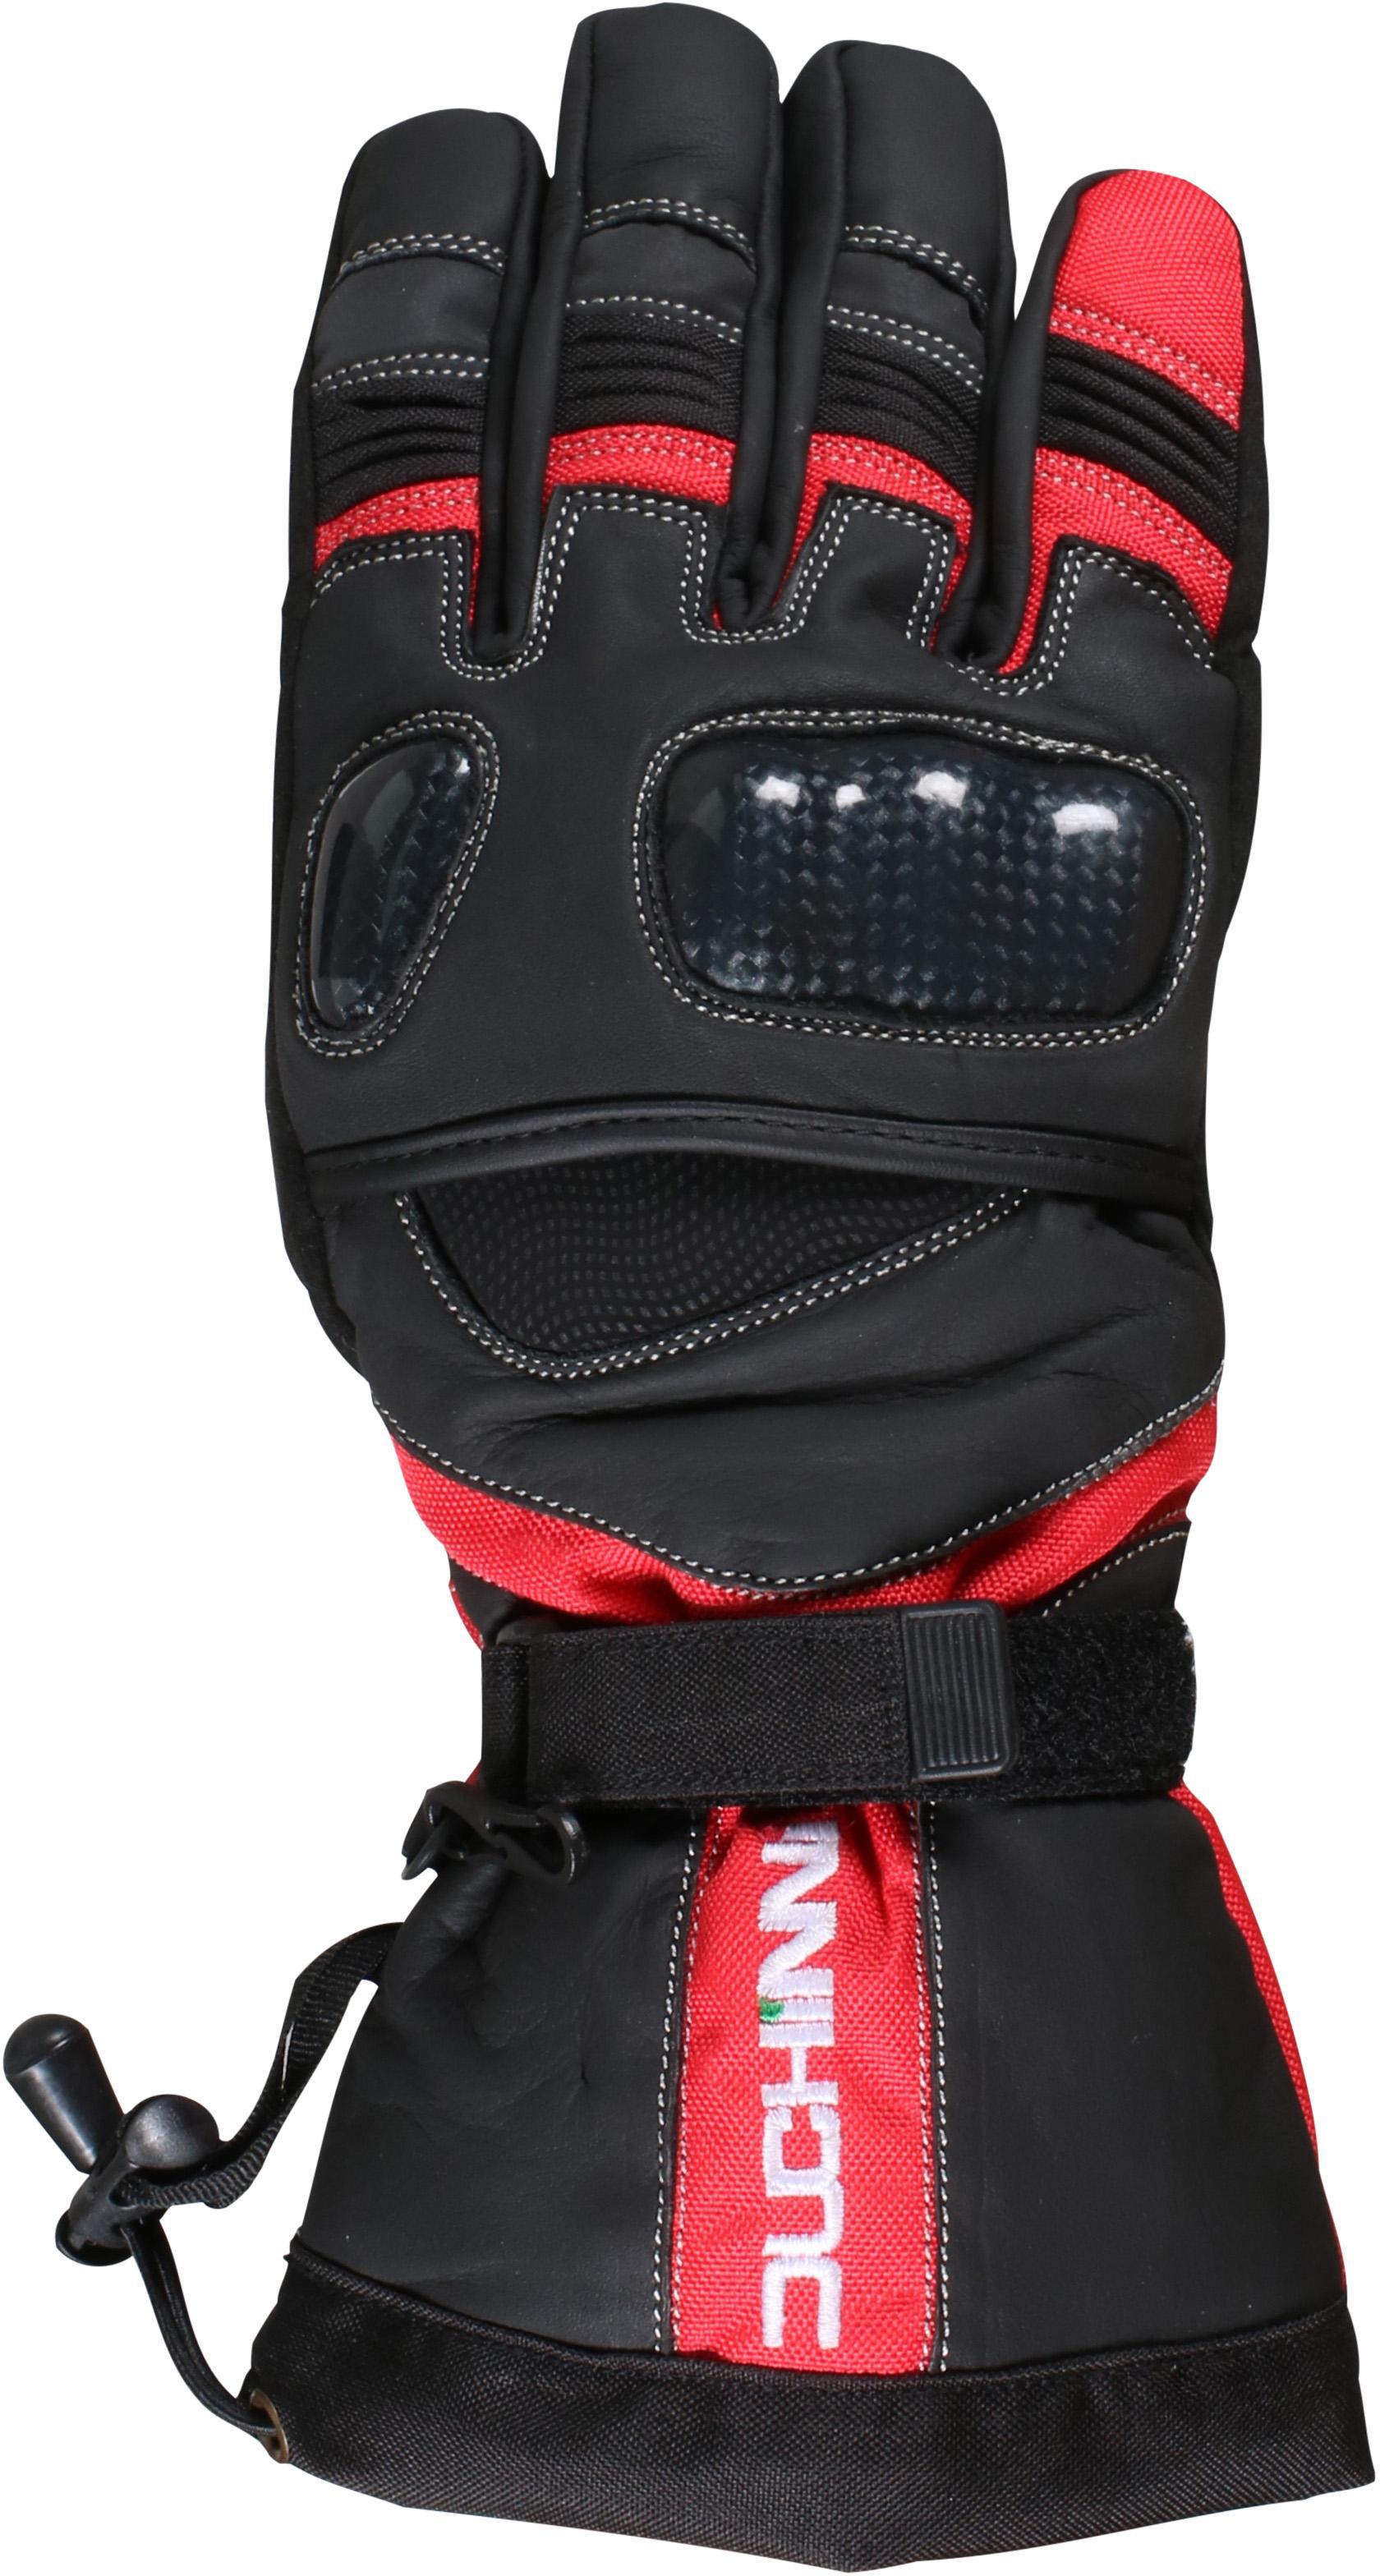 Duchinni Yukon Motorcycle Gloves - Black And Red, Xl